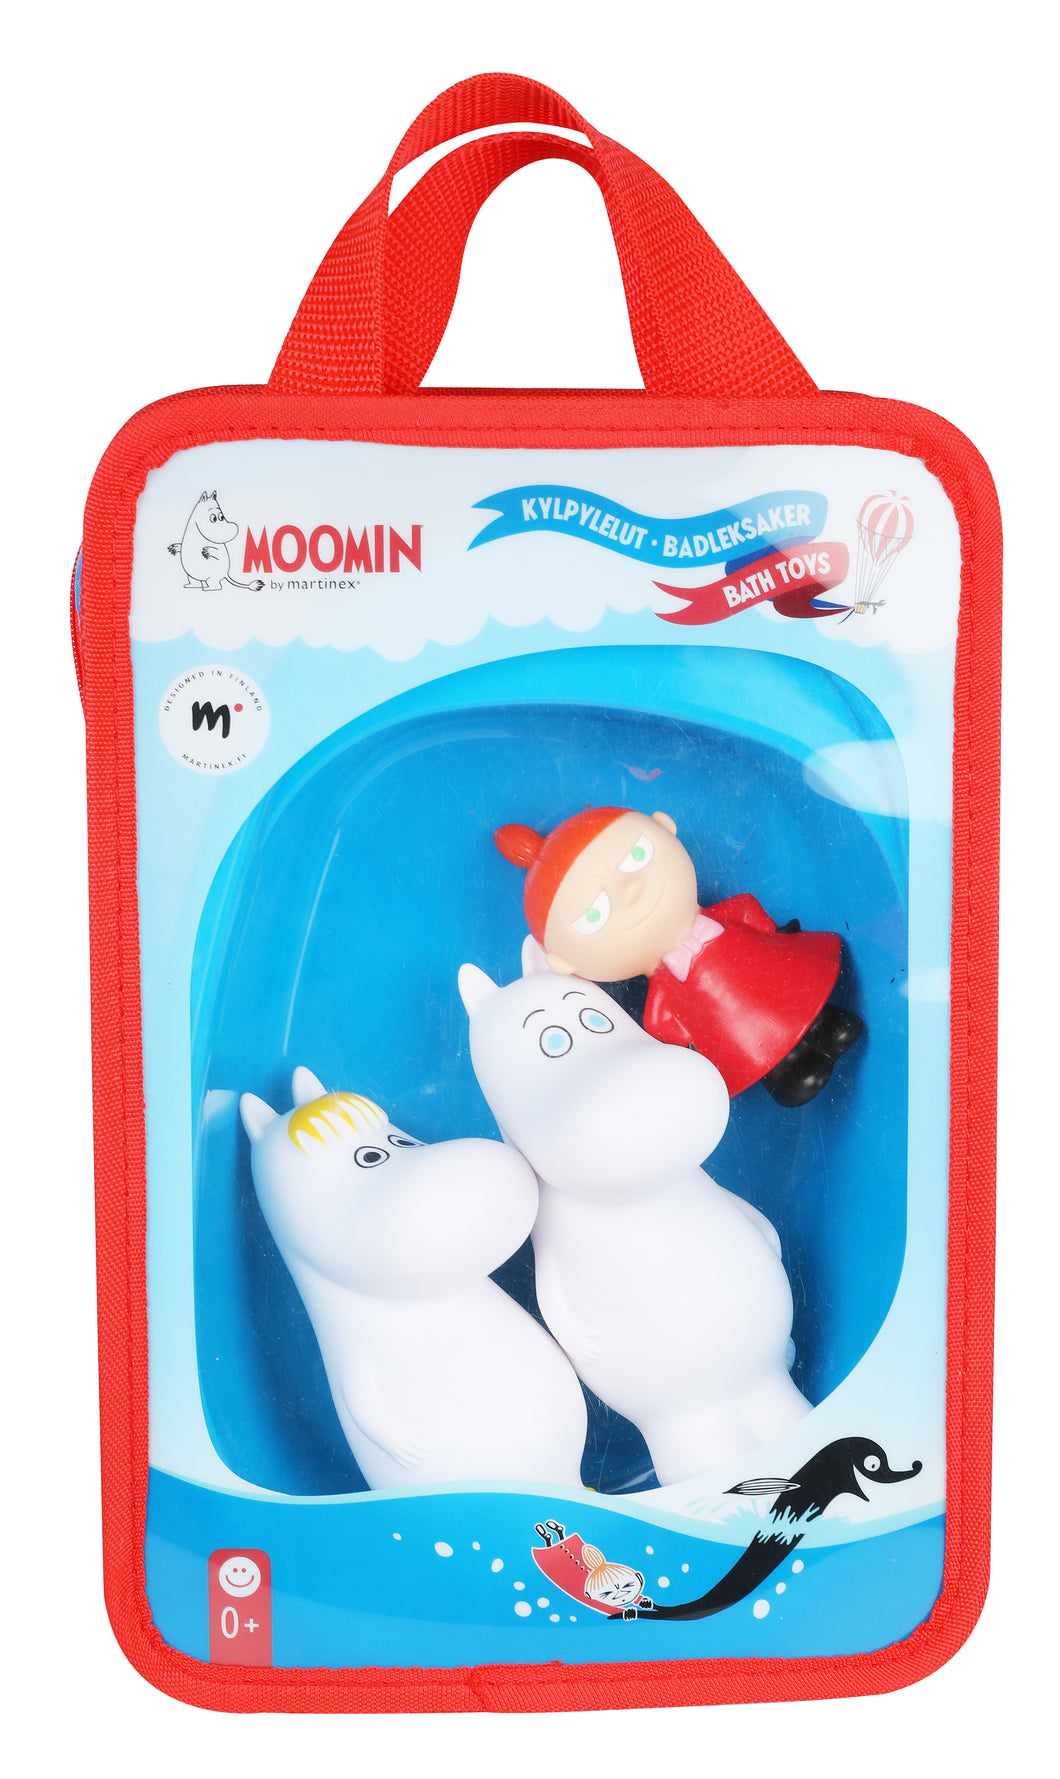 Moomin Bath Set - Incl. 3 Figures & Bath